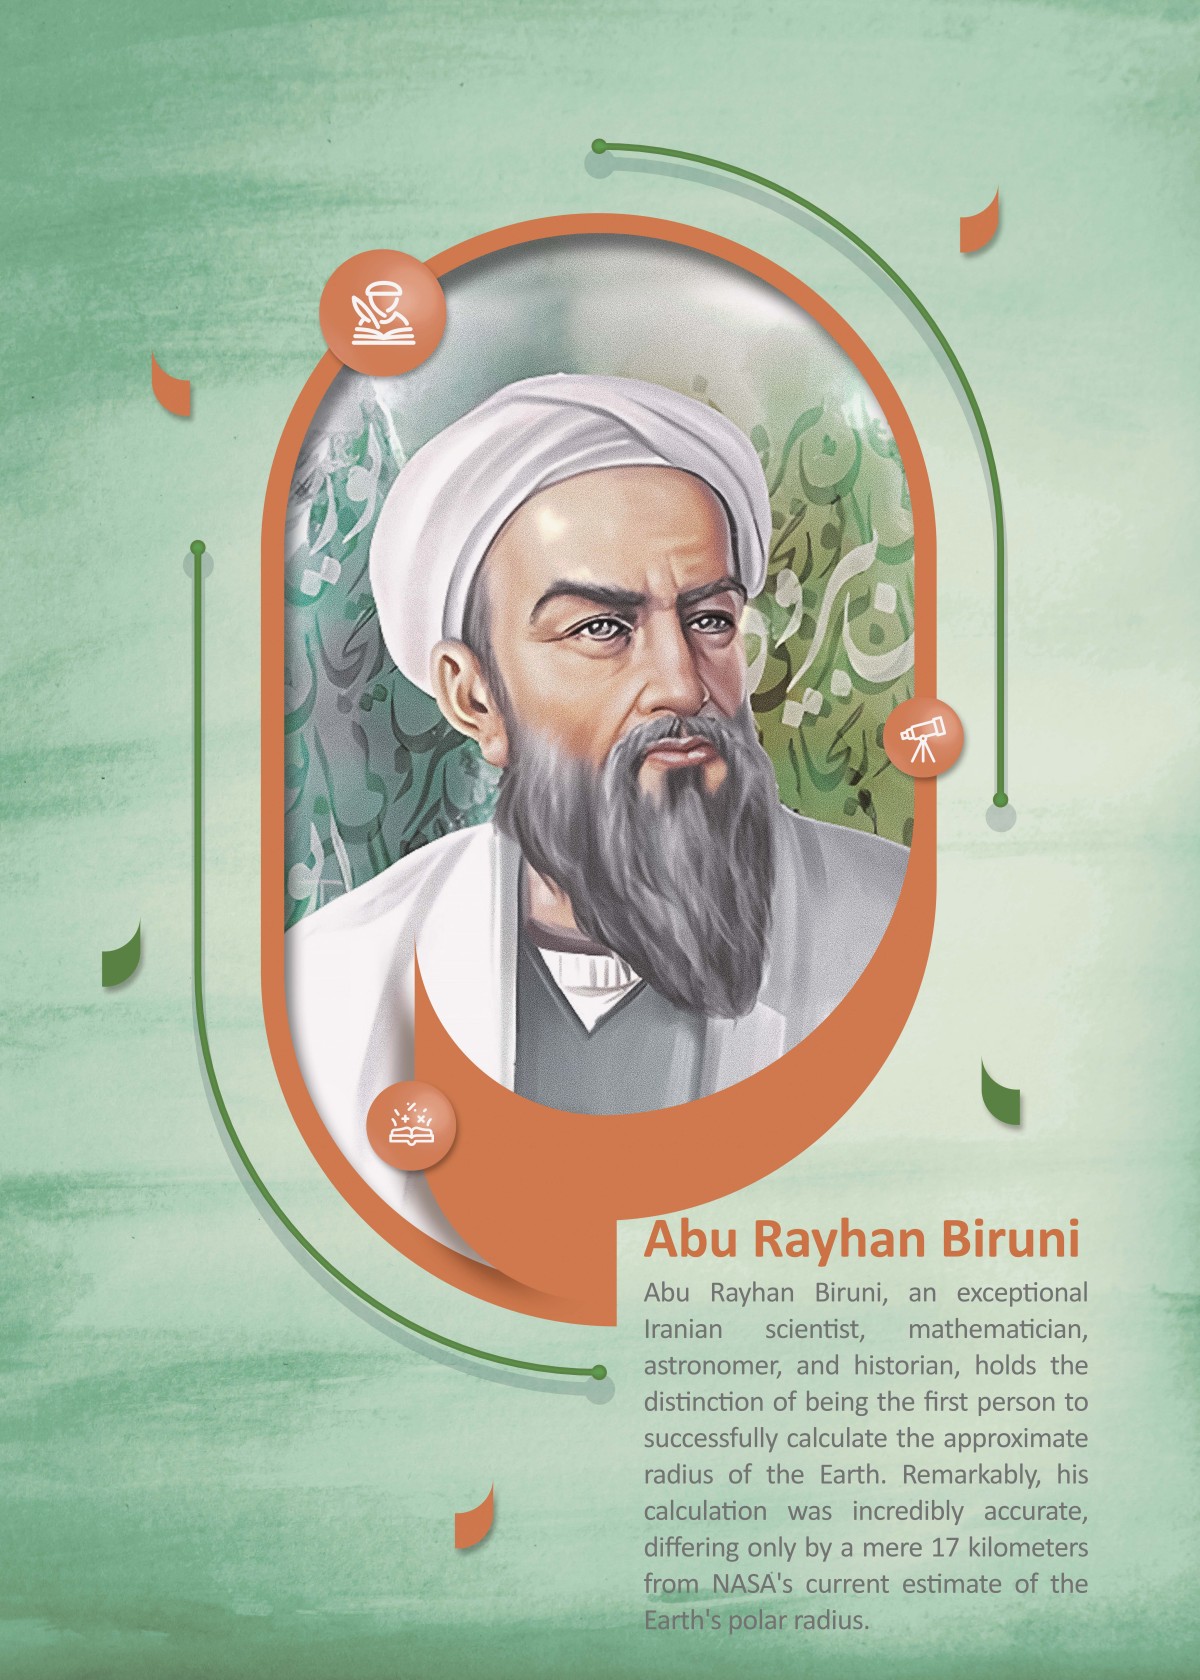 Abu Rayhan Biruni